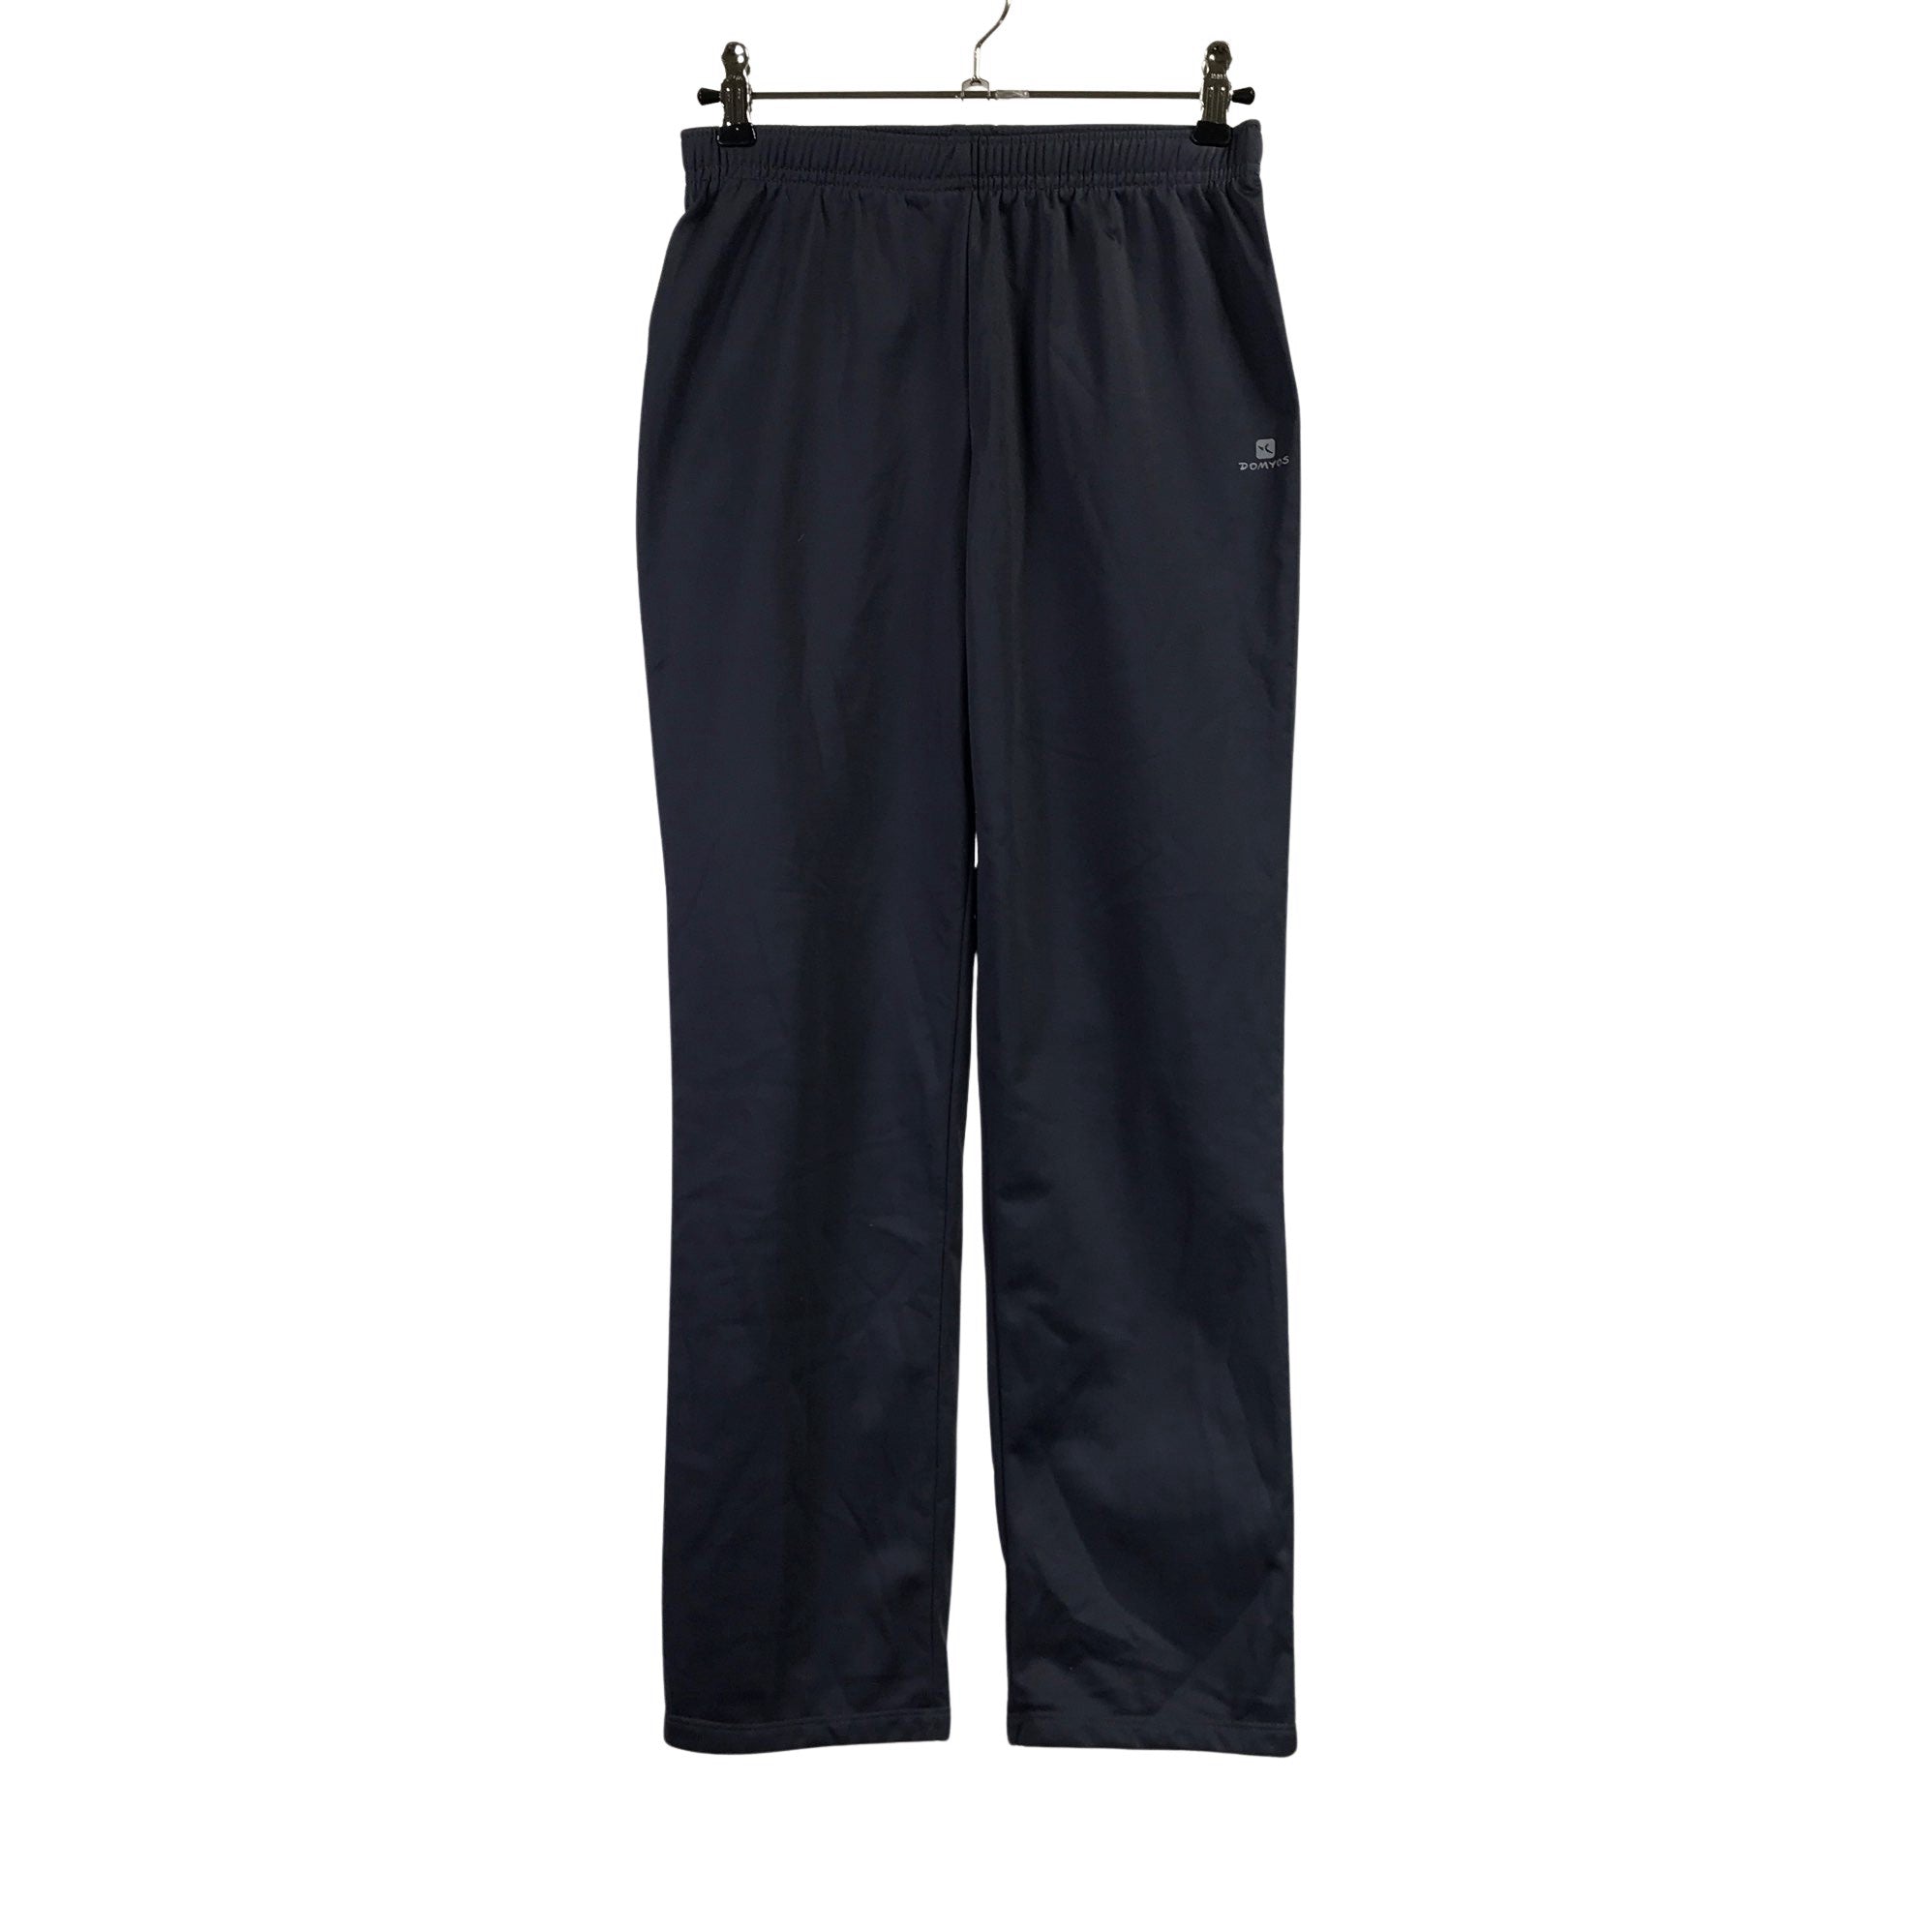 Domyos by Decathlon Men Black Regular Fit Solid Yoga Pants : Amazon.in:  Clothing & Accessories